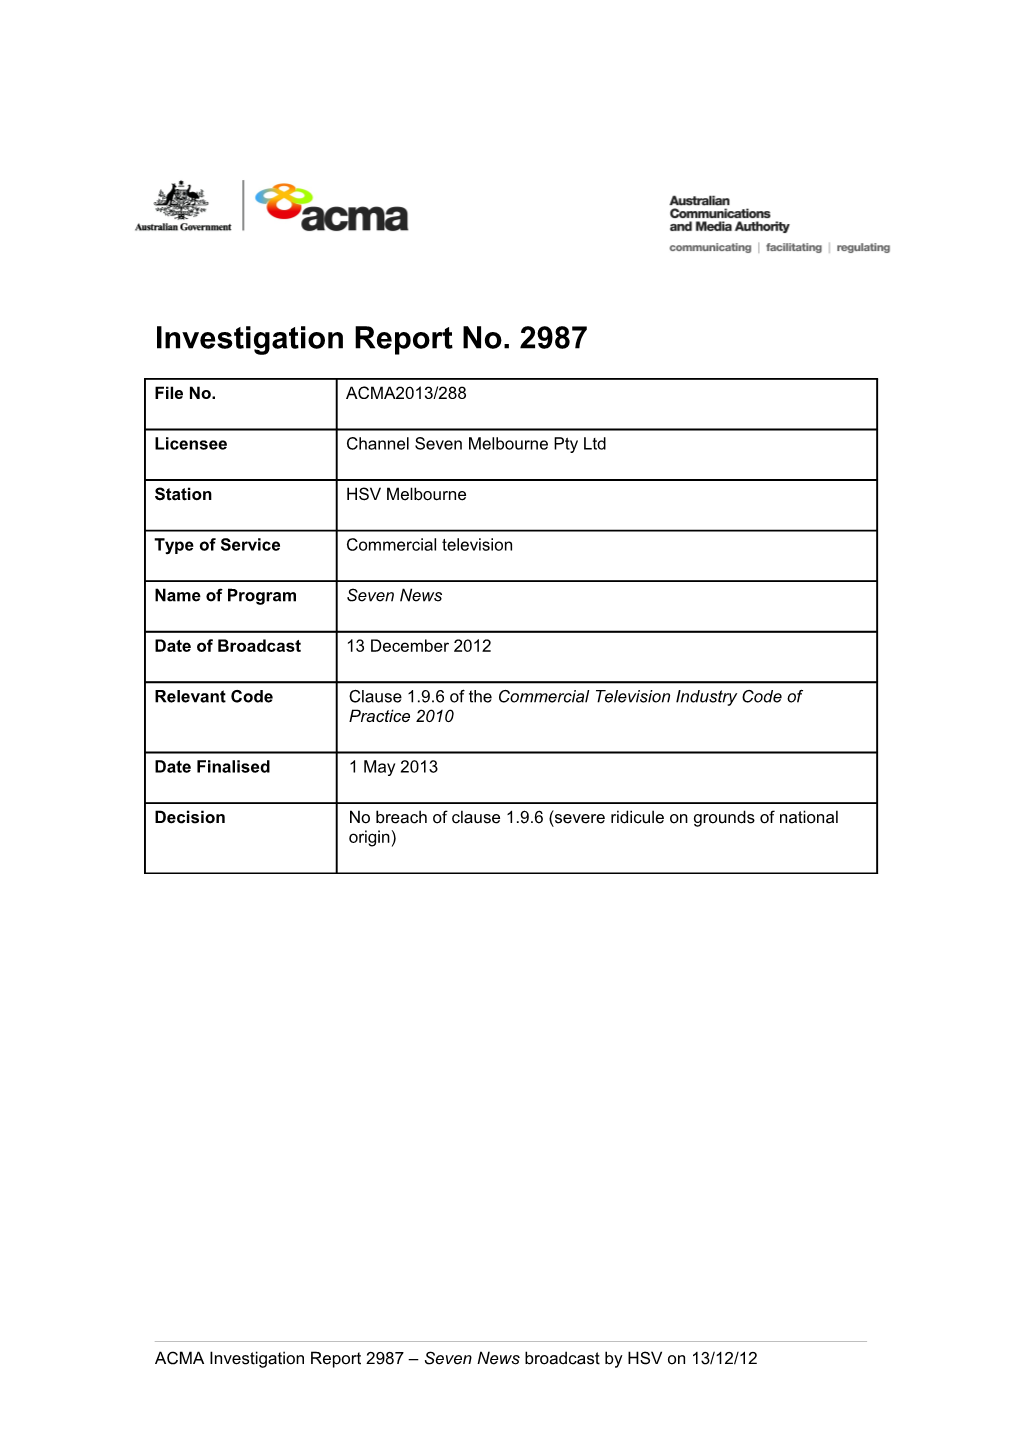 HSV7 Melbourne - ACMA Investigation Report 2987